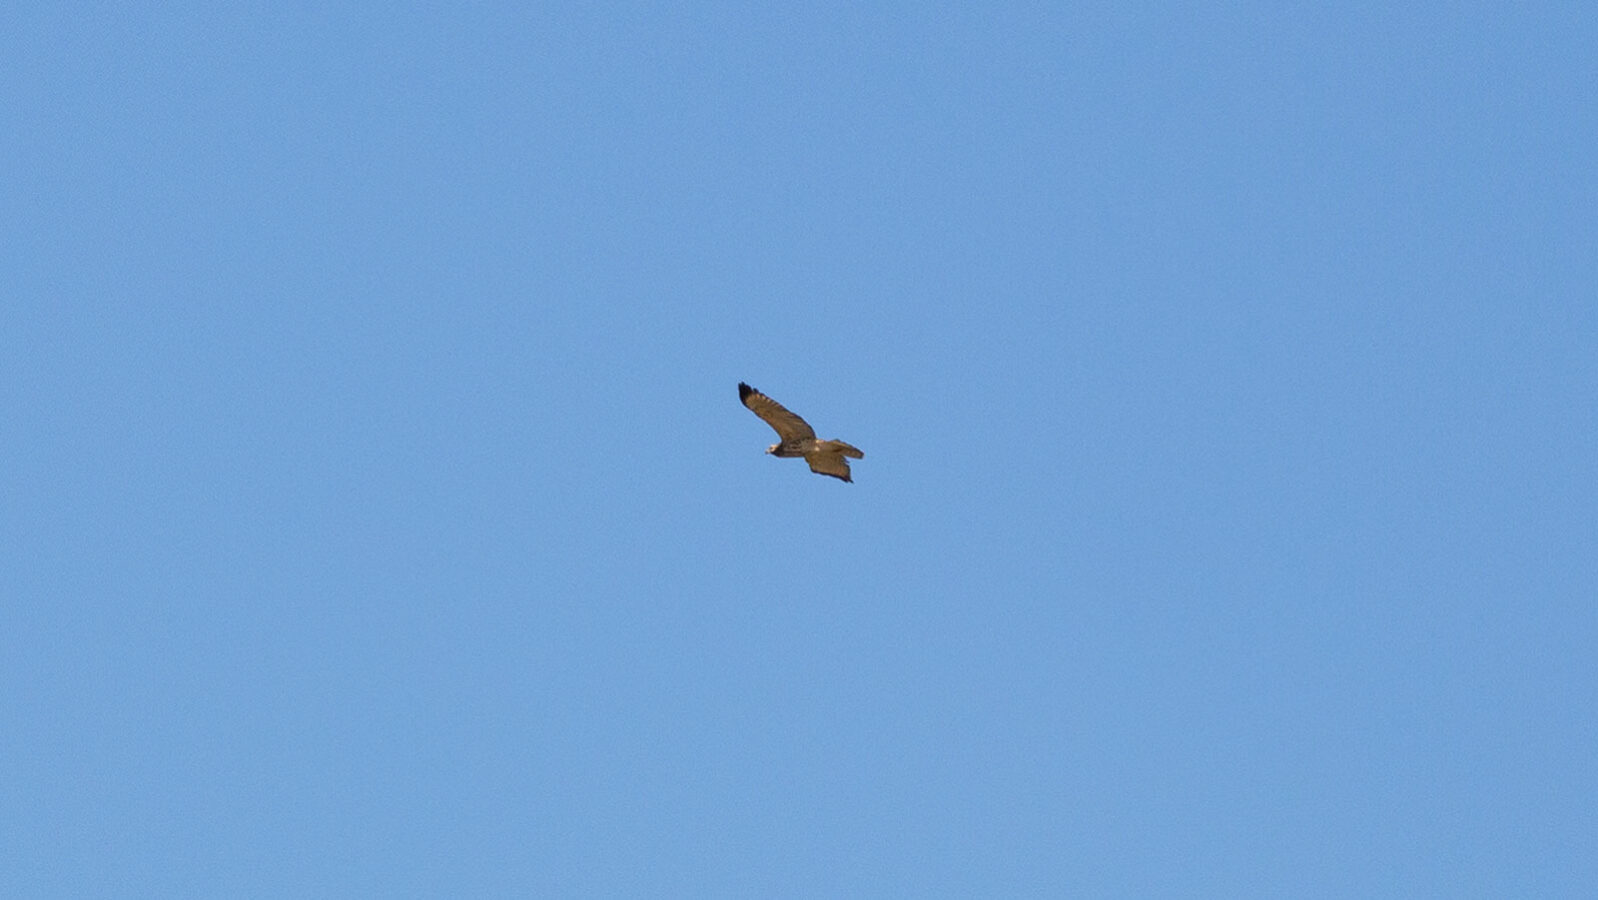 Swainson's hawk flying through the sky